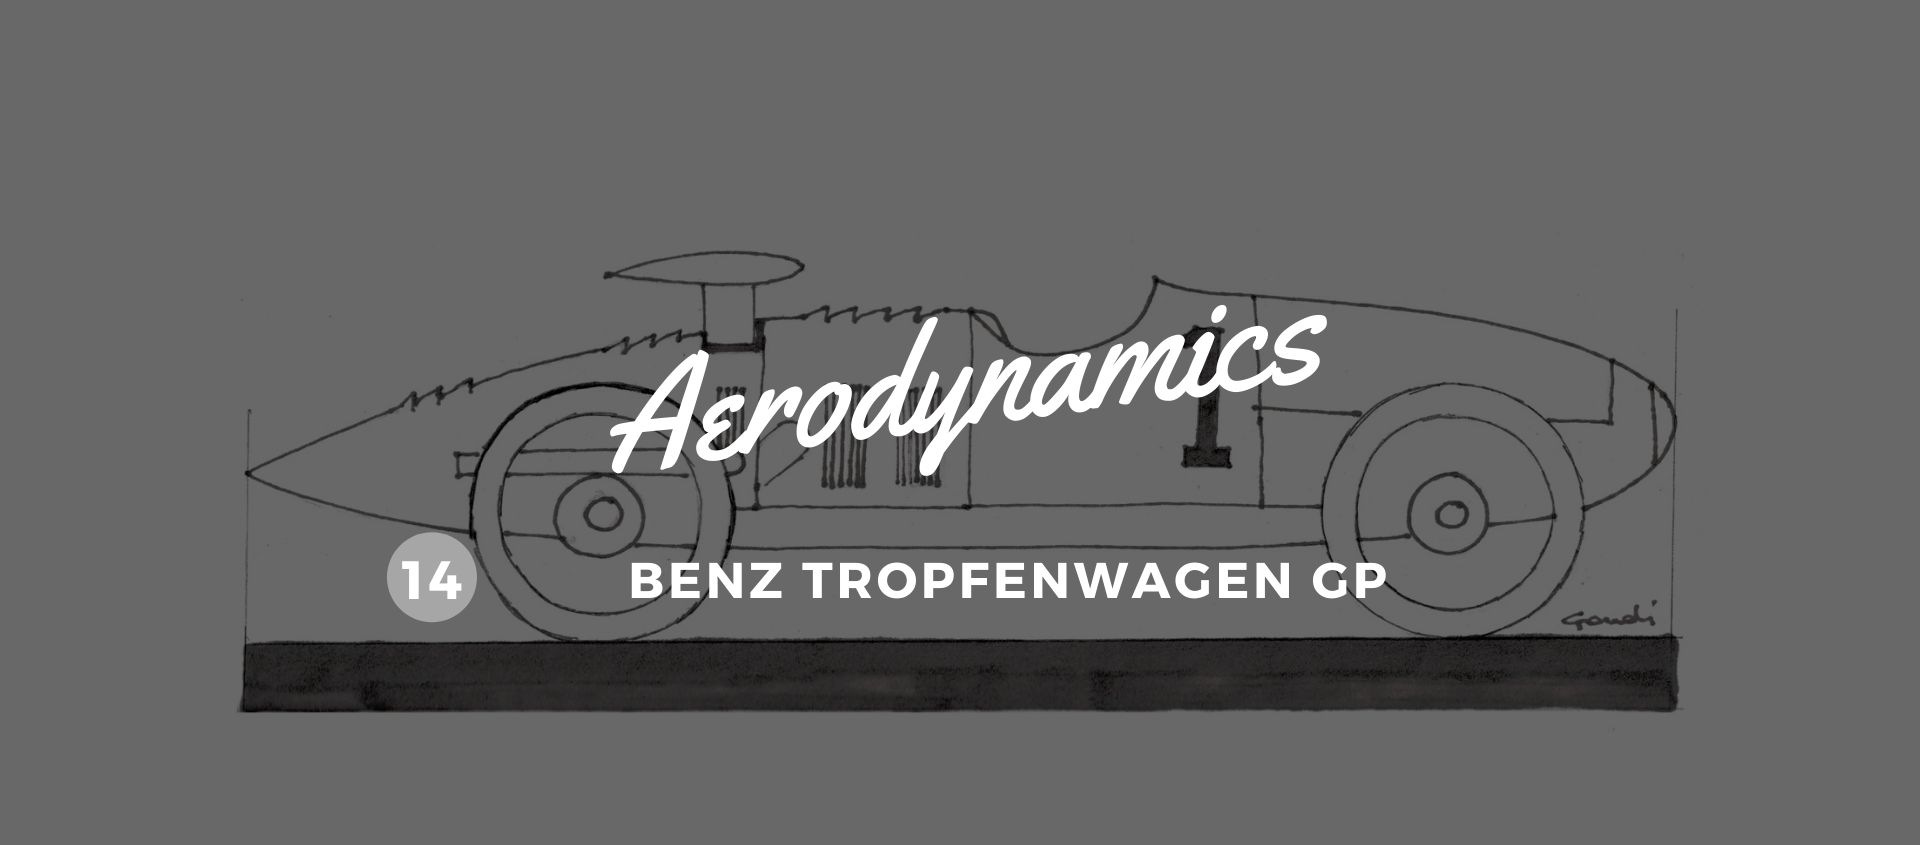 1923. Benz Tropfenwagen GP. The first Silver Arrow